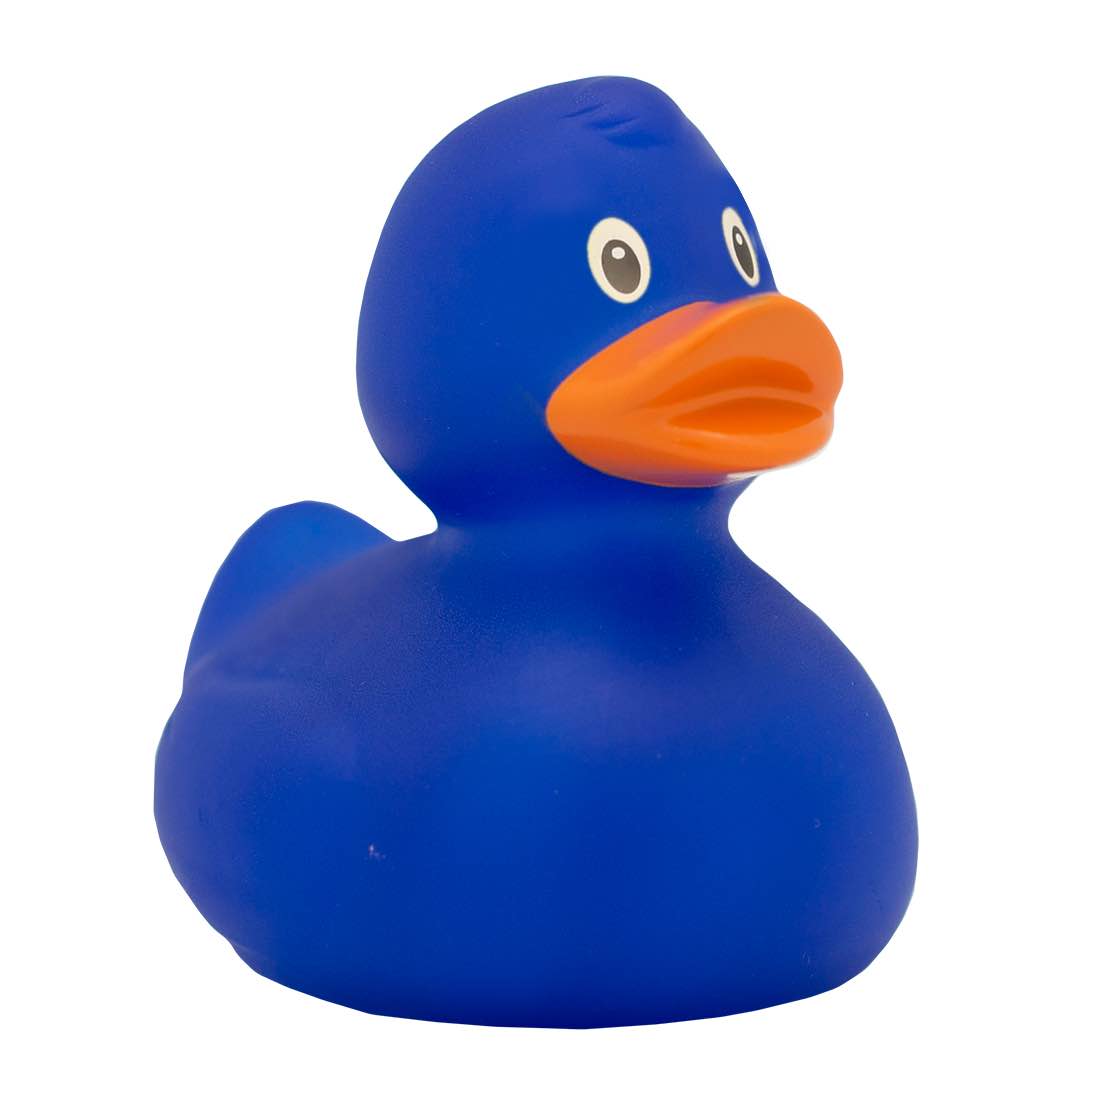 blue rubber ducks in bulk